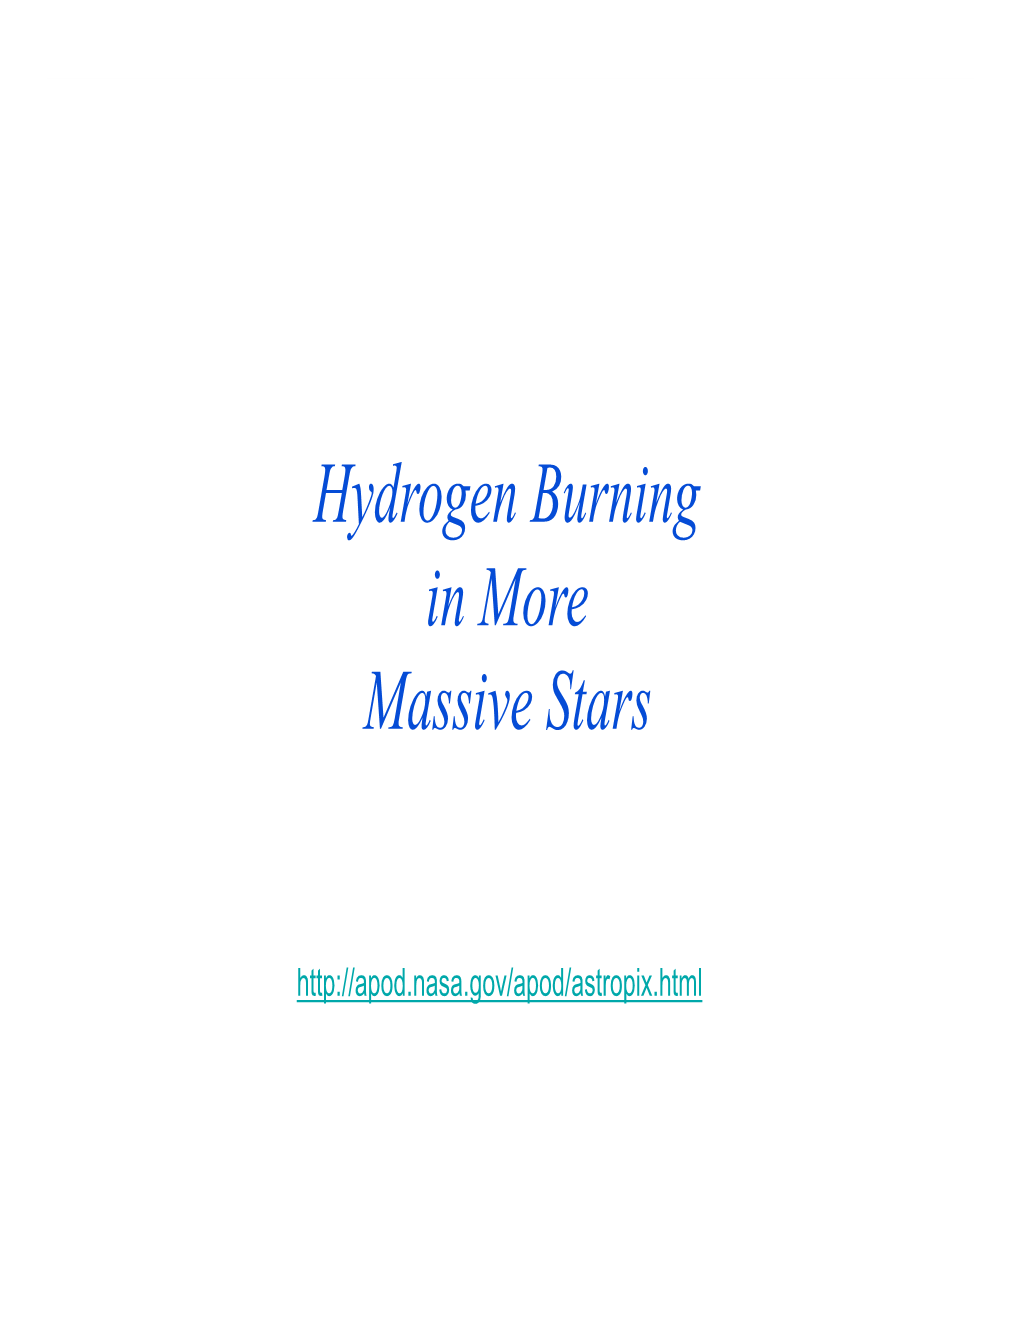 Hydrogen Burning in More Massive Stars